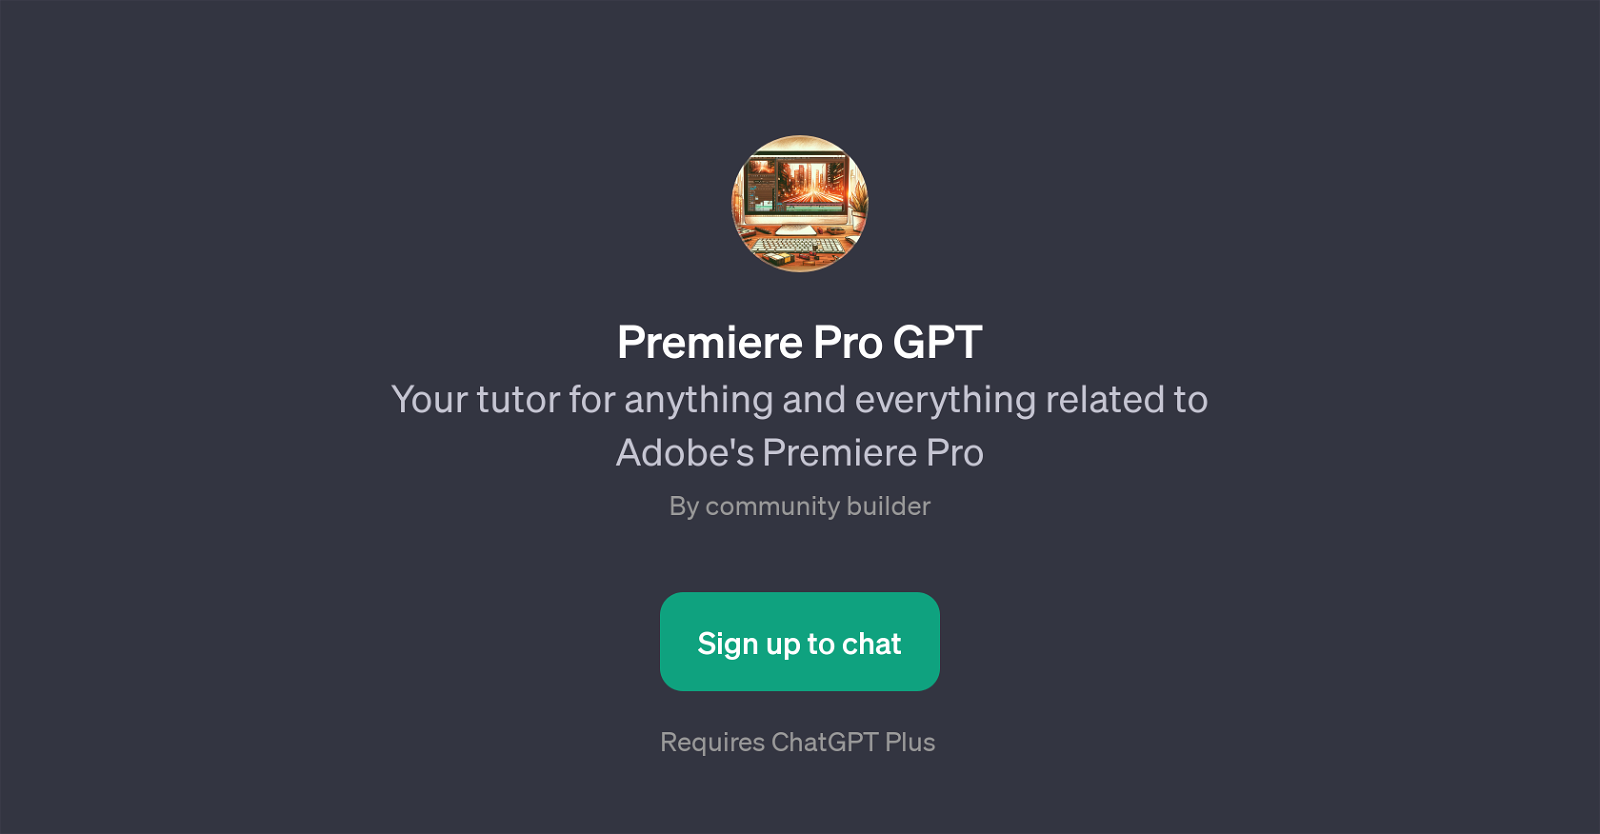 Premiere Pro GPT website